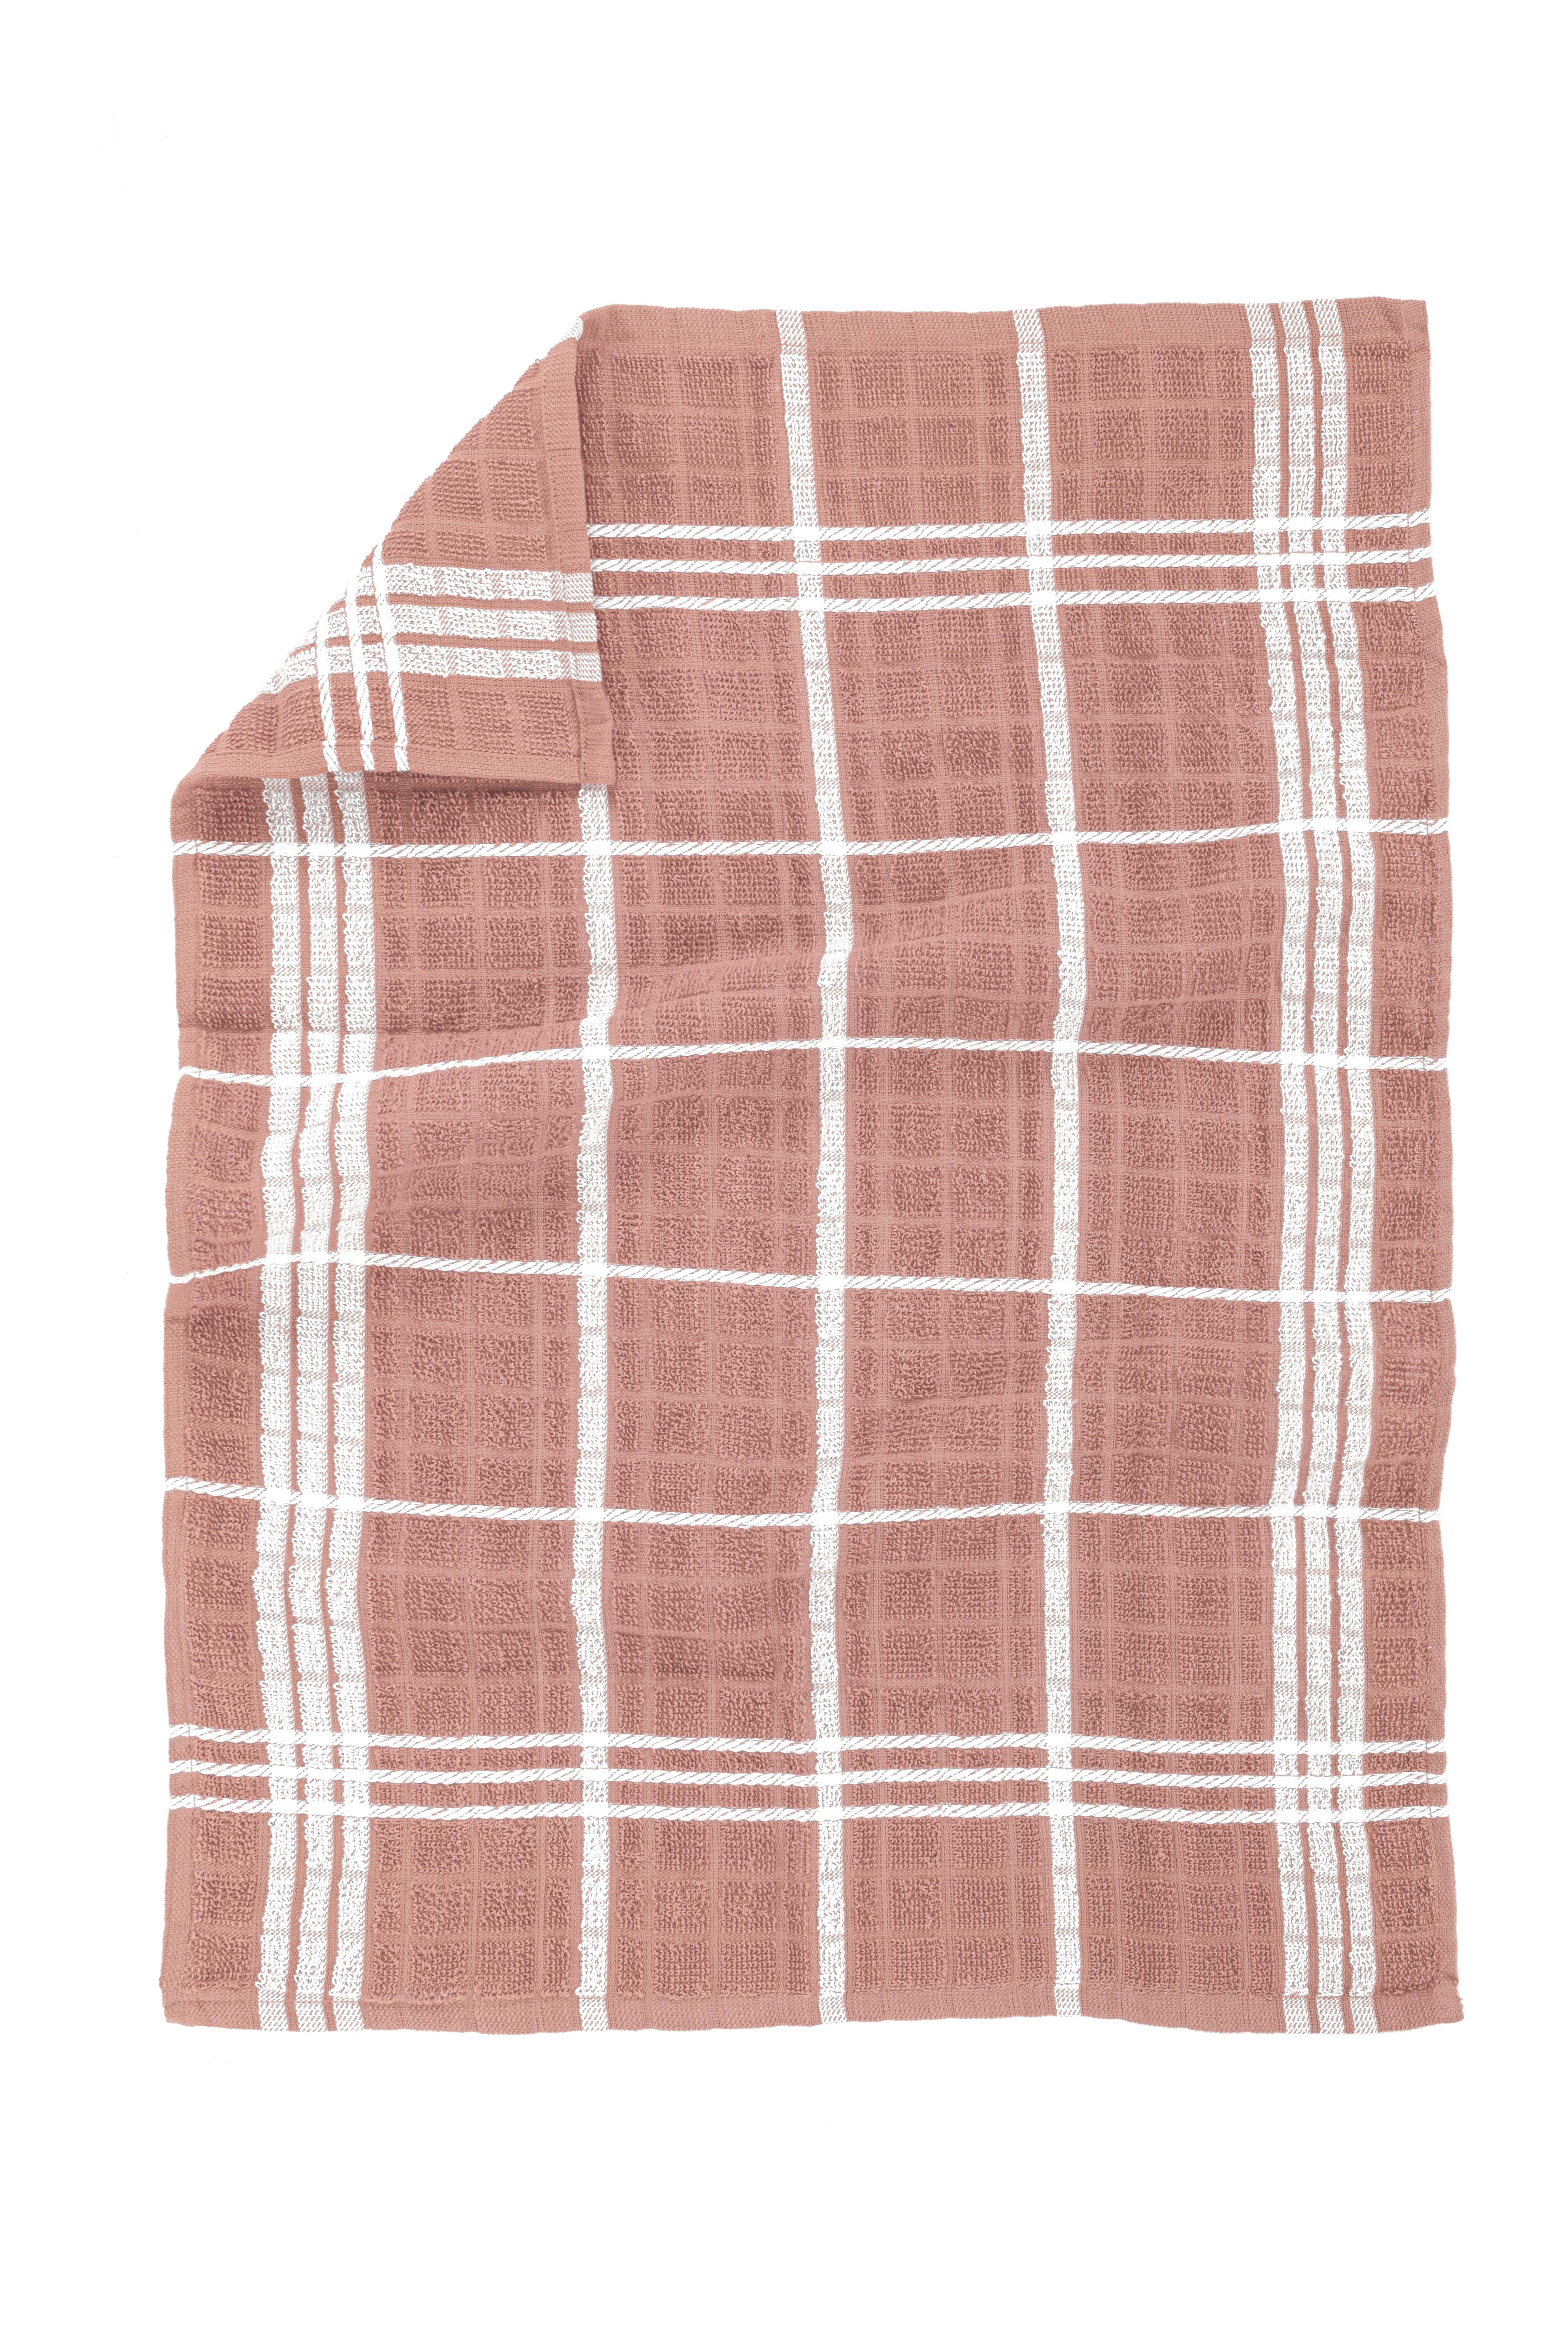 Torchon OMAN 50x70cm - set/3 - pink